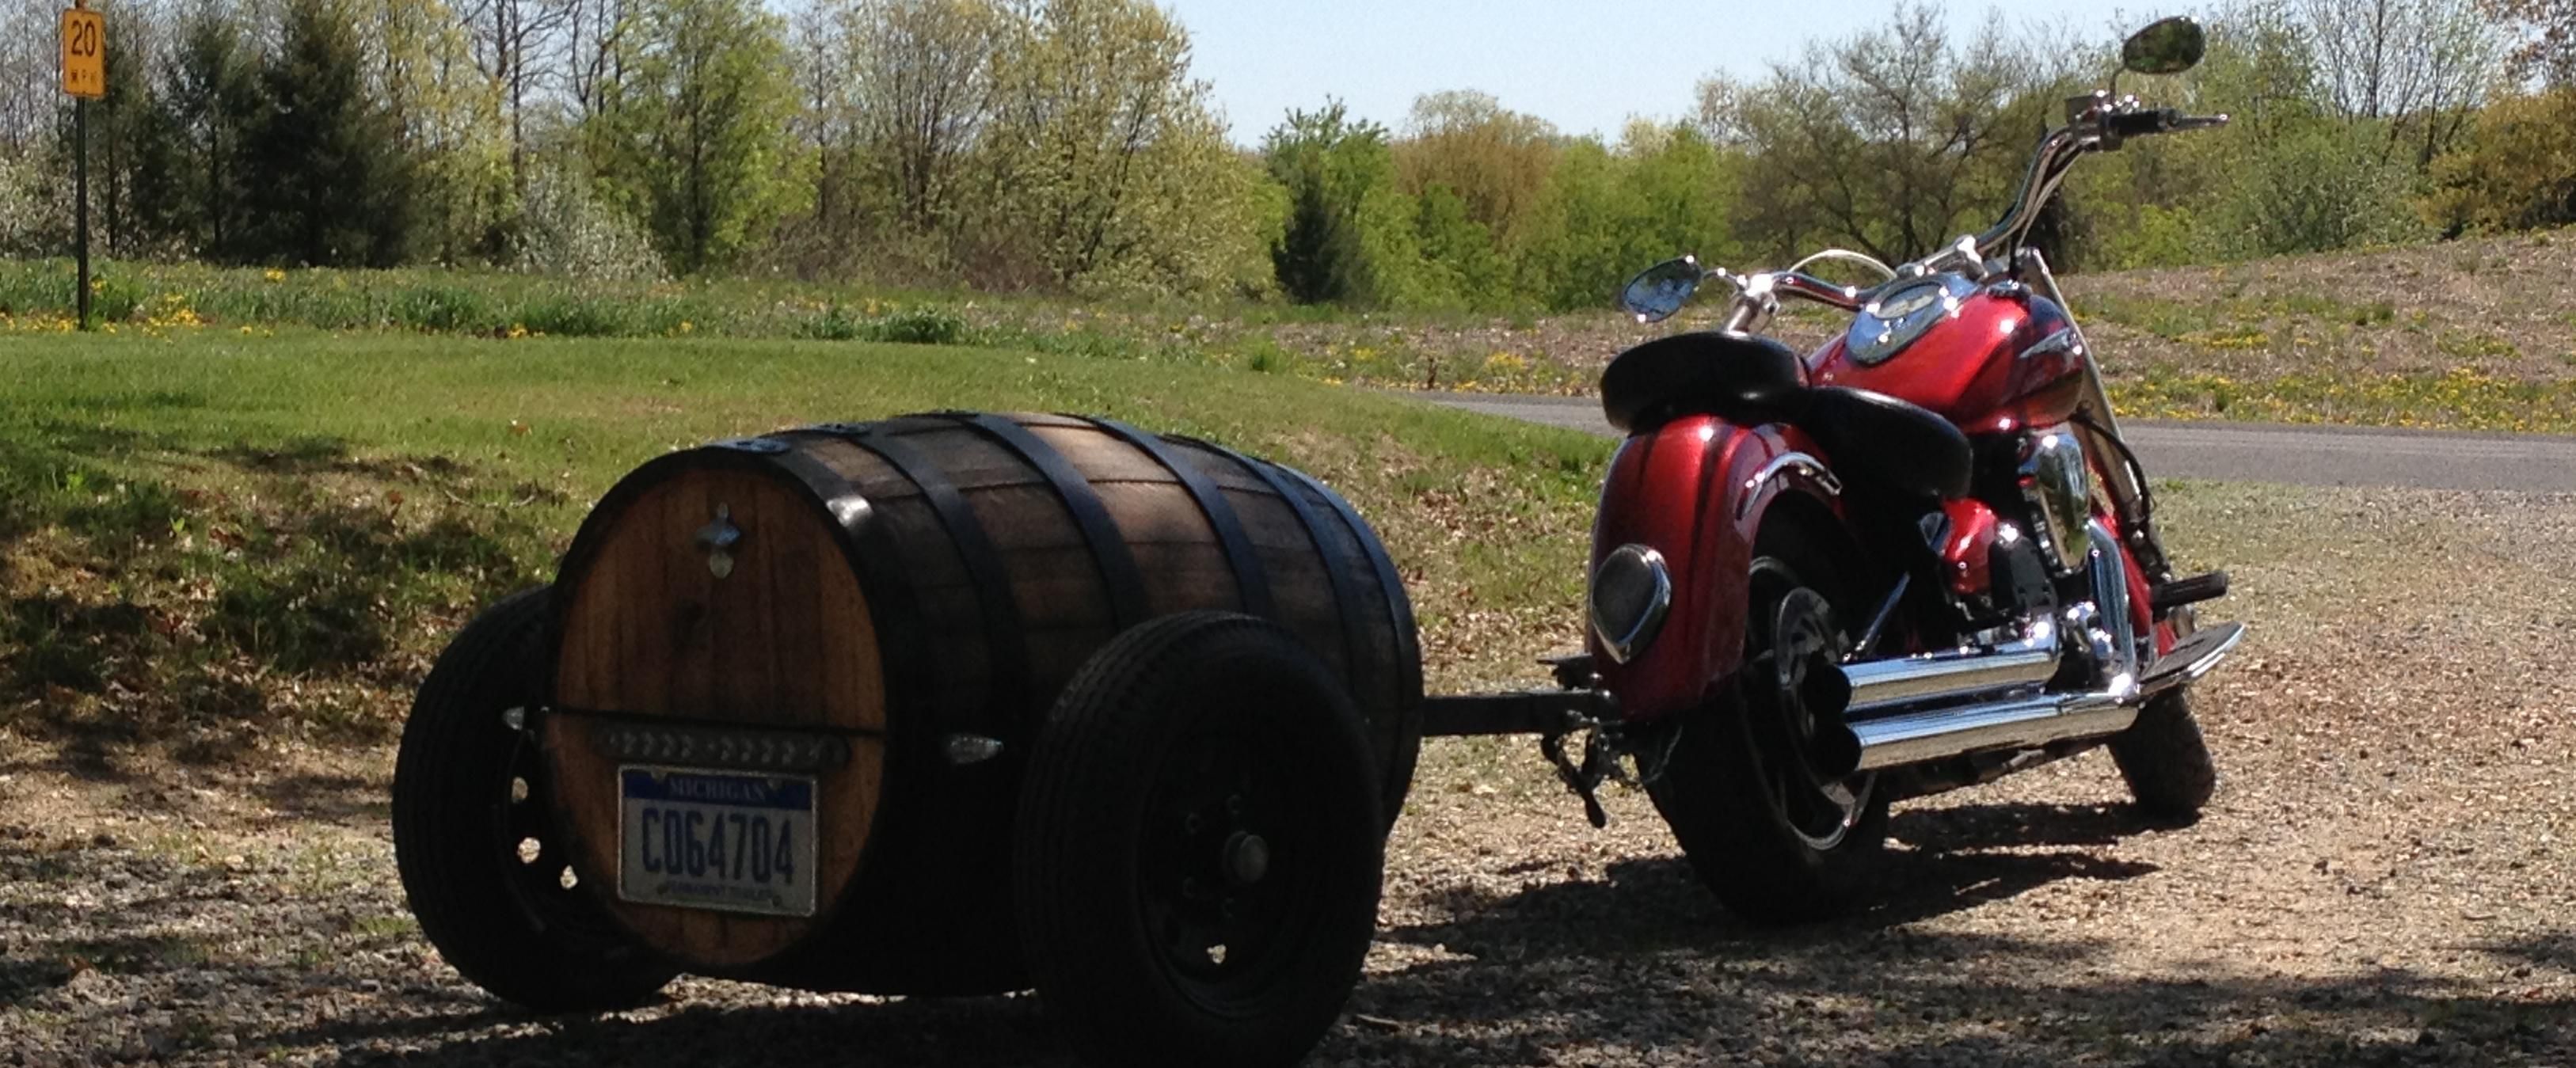 50 Gallon Whiskey Barrel Motorcycle Trailer